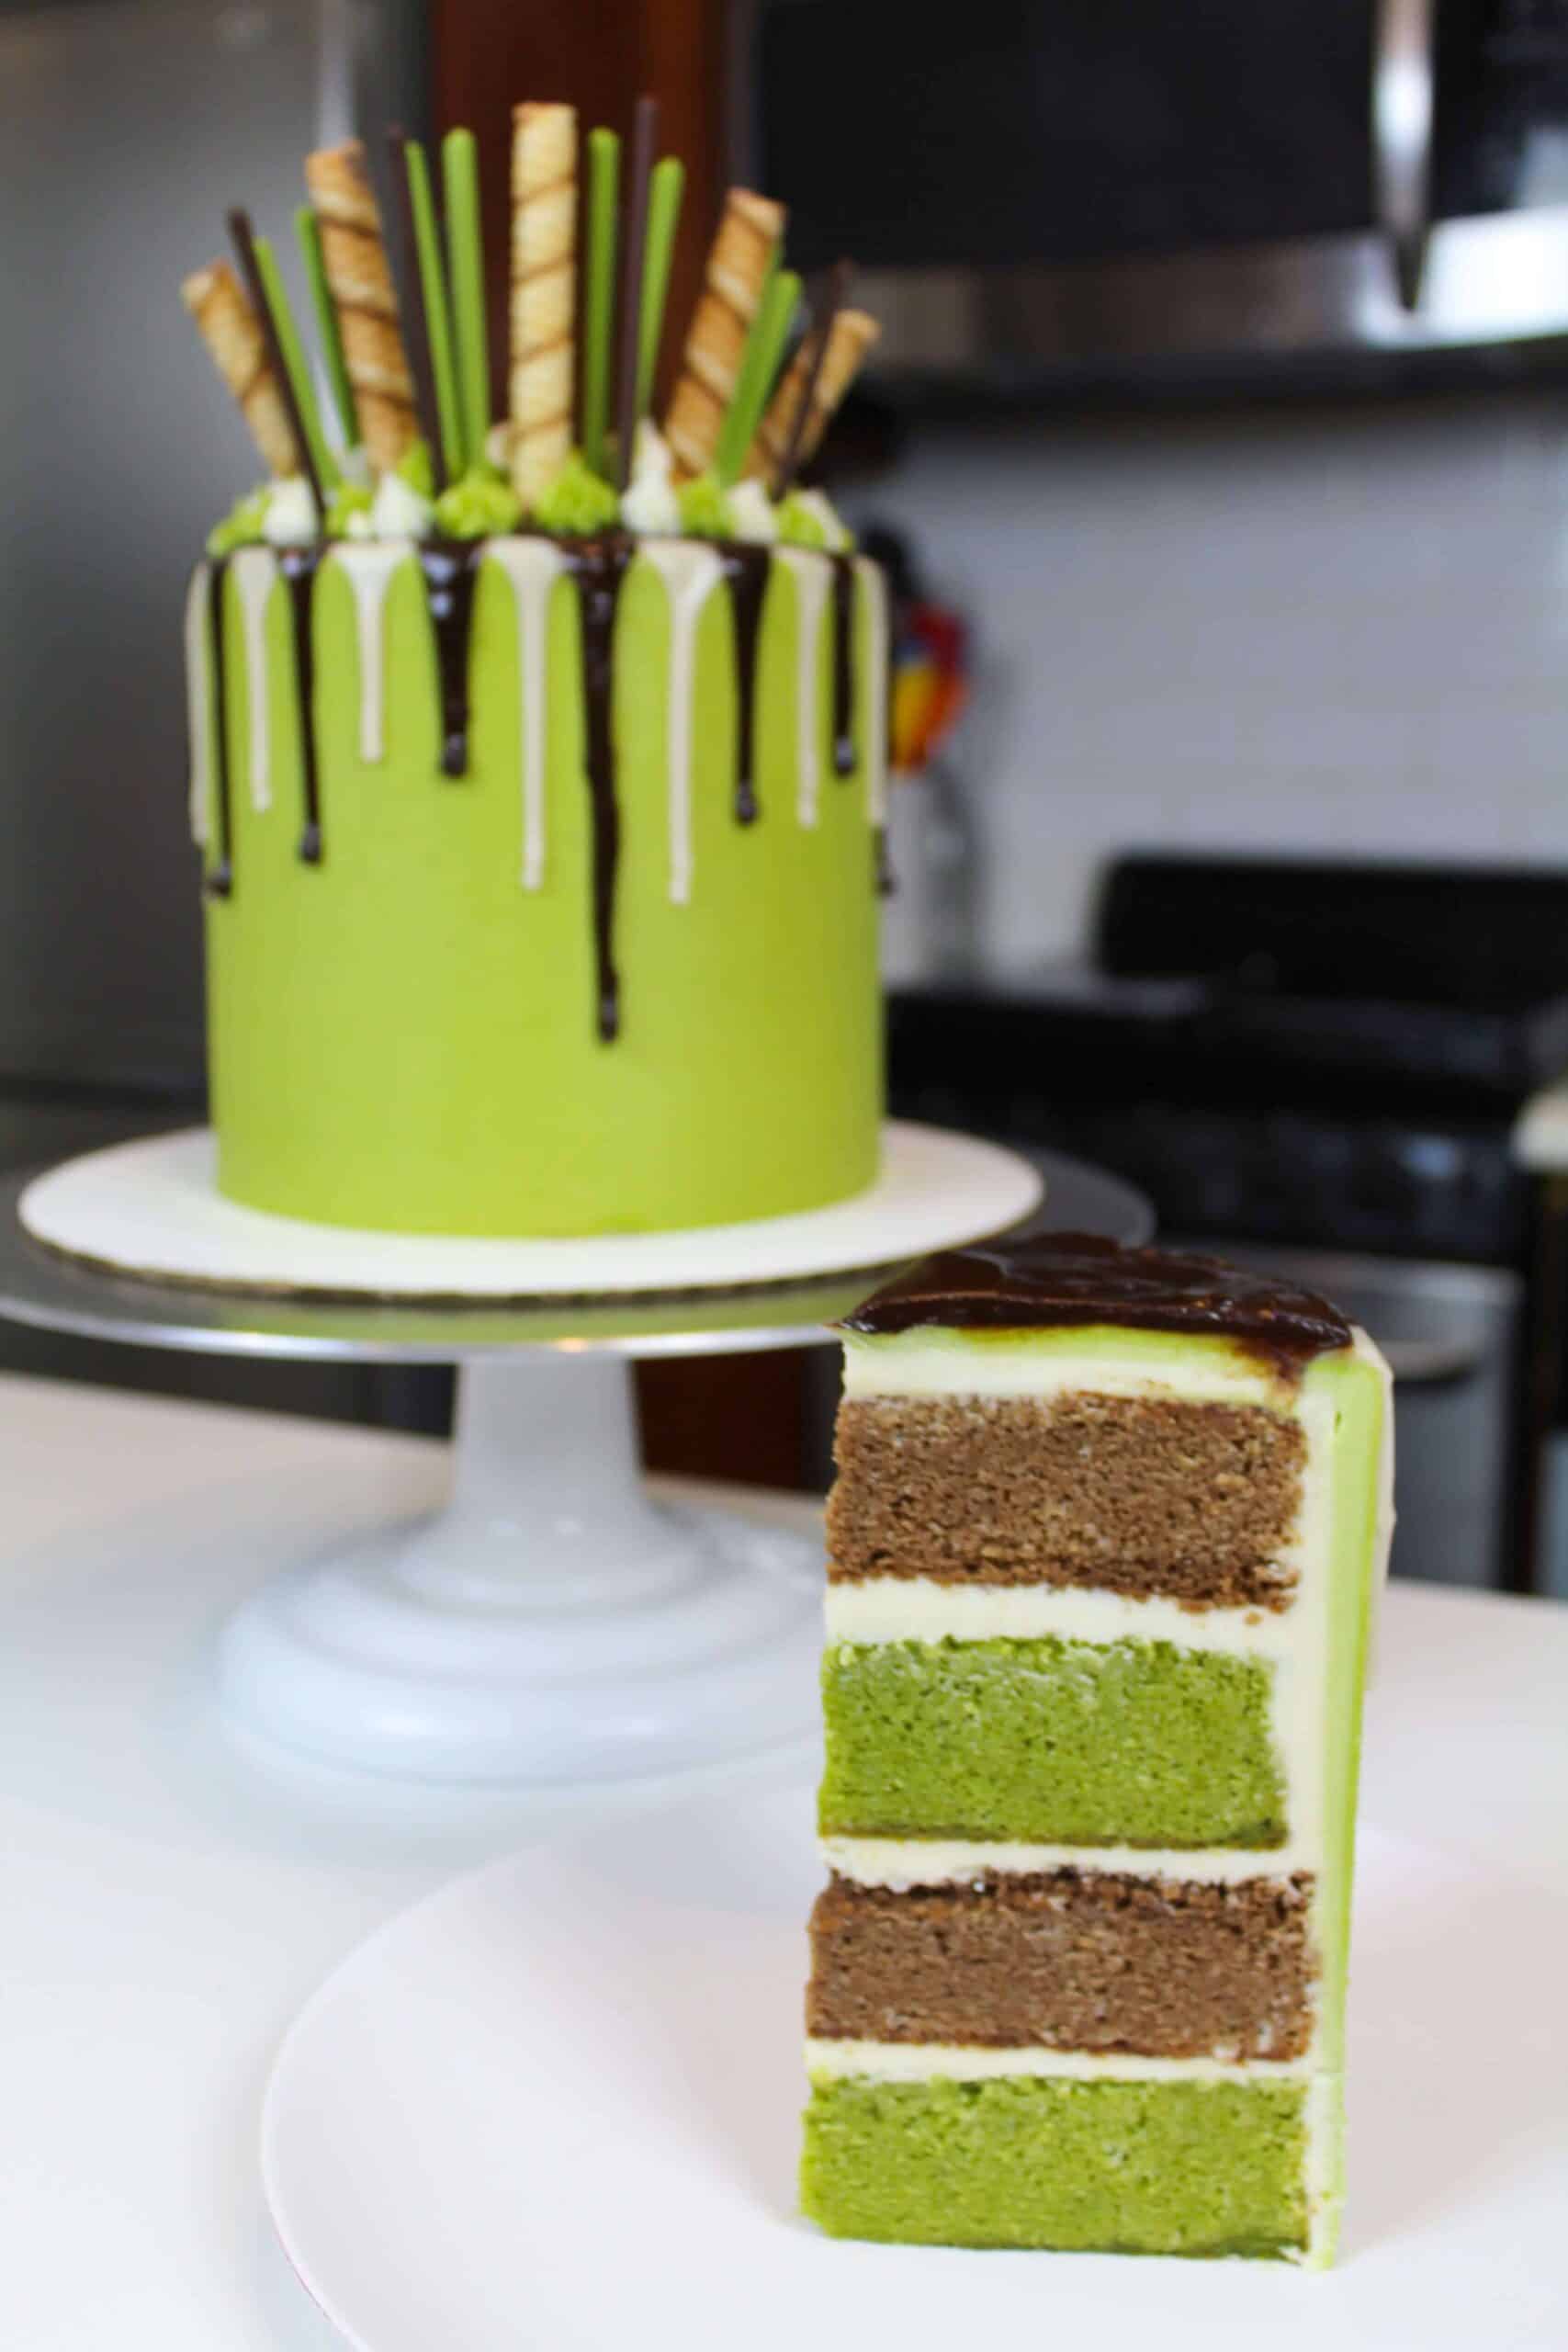 The Best Matcha Cake (green tea cake) – Takes Two Eggs